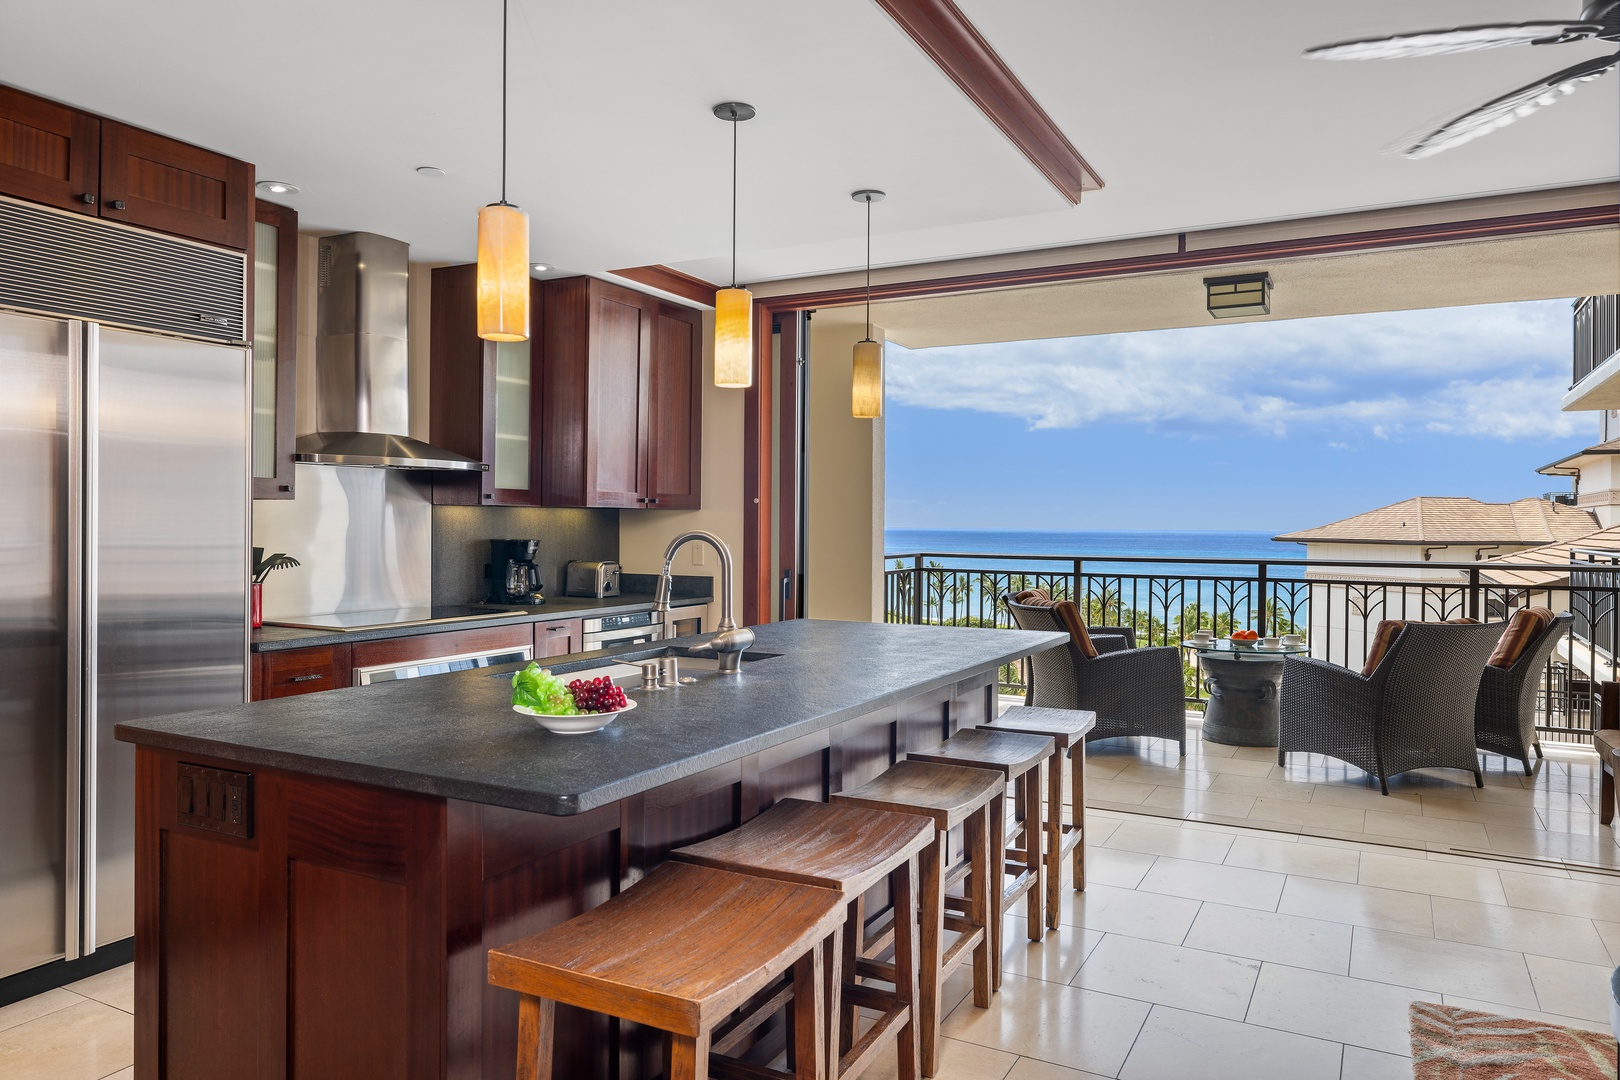 Kapolei Vacation Rentals, Ko Olina Beach Villas O1001 - The fully equipped kitchen with bar seating and tropical views.